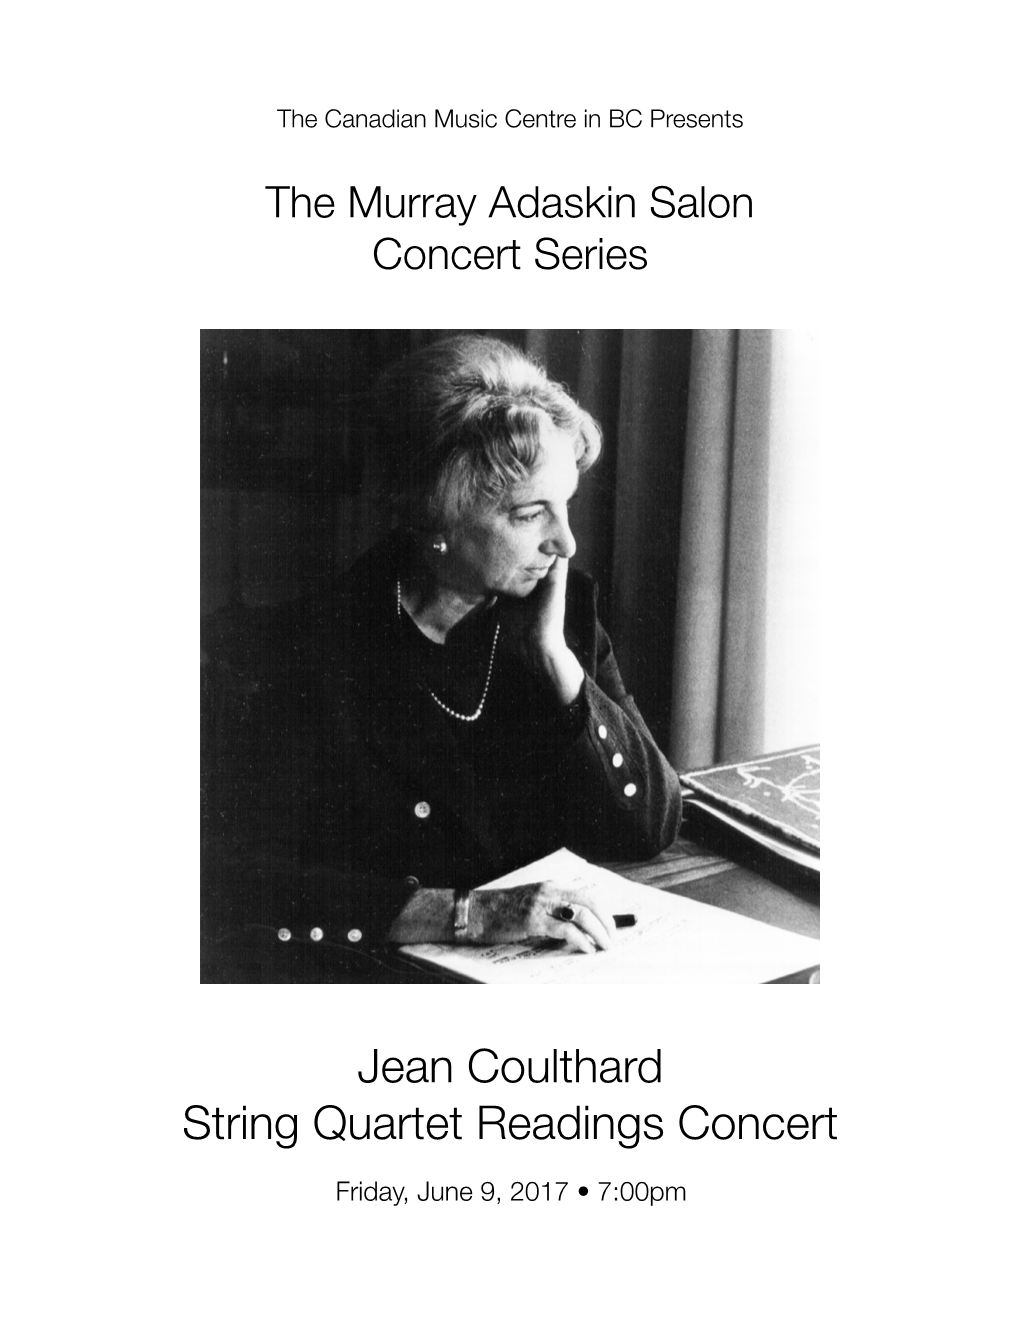 Jean Coulthard String Quartet Readings Concert